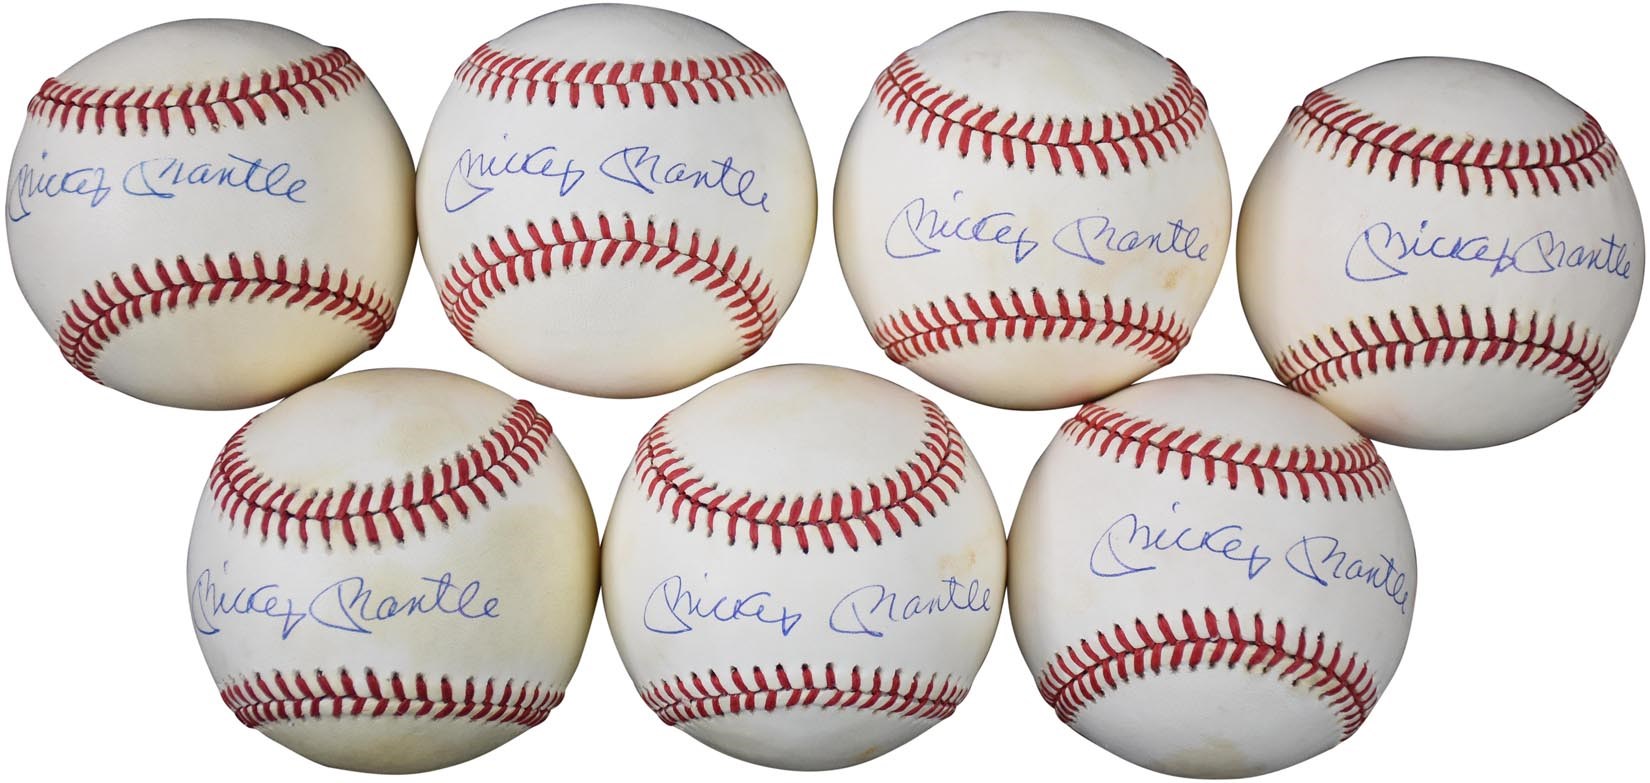 Mantle and Maris - "7" Mickey Mantle Single Signed Baseballs (All PSA)